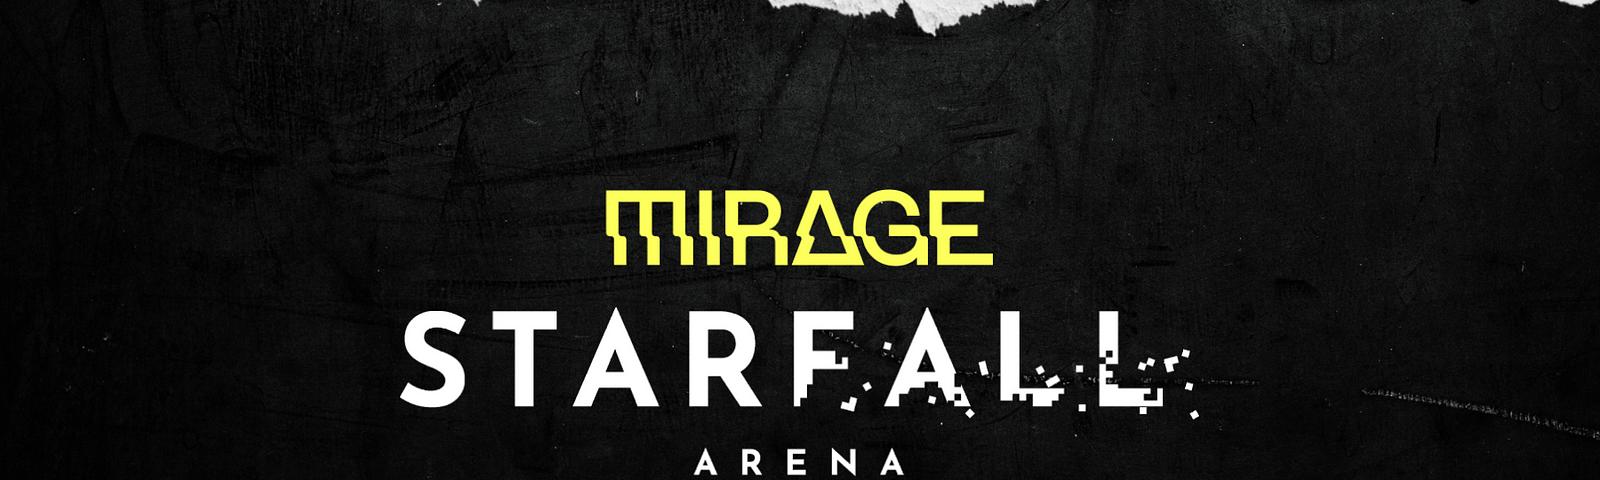 Mirage and Starfall Arena logos